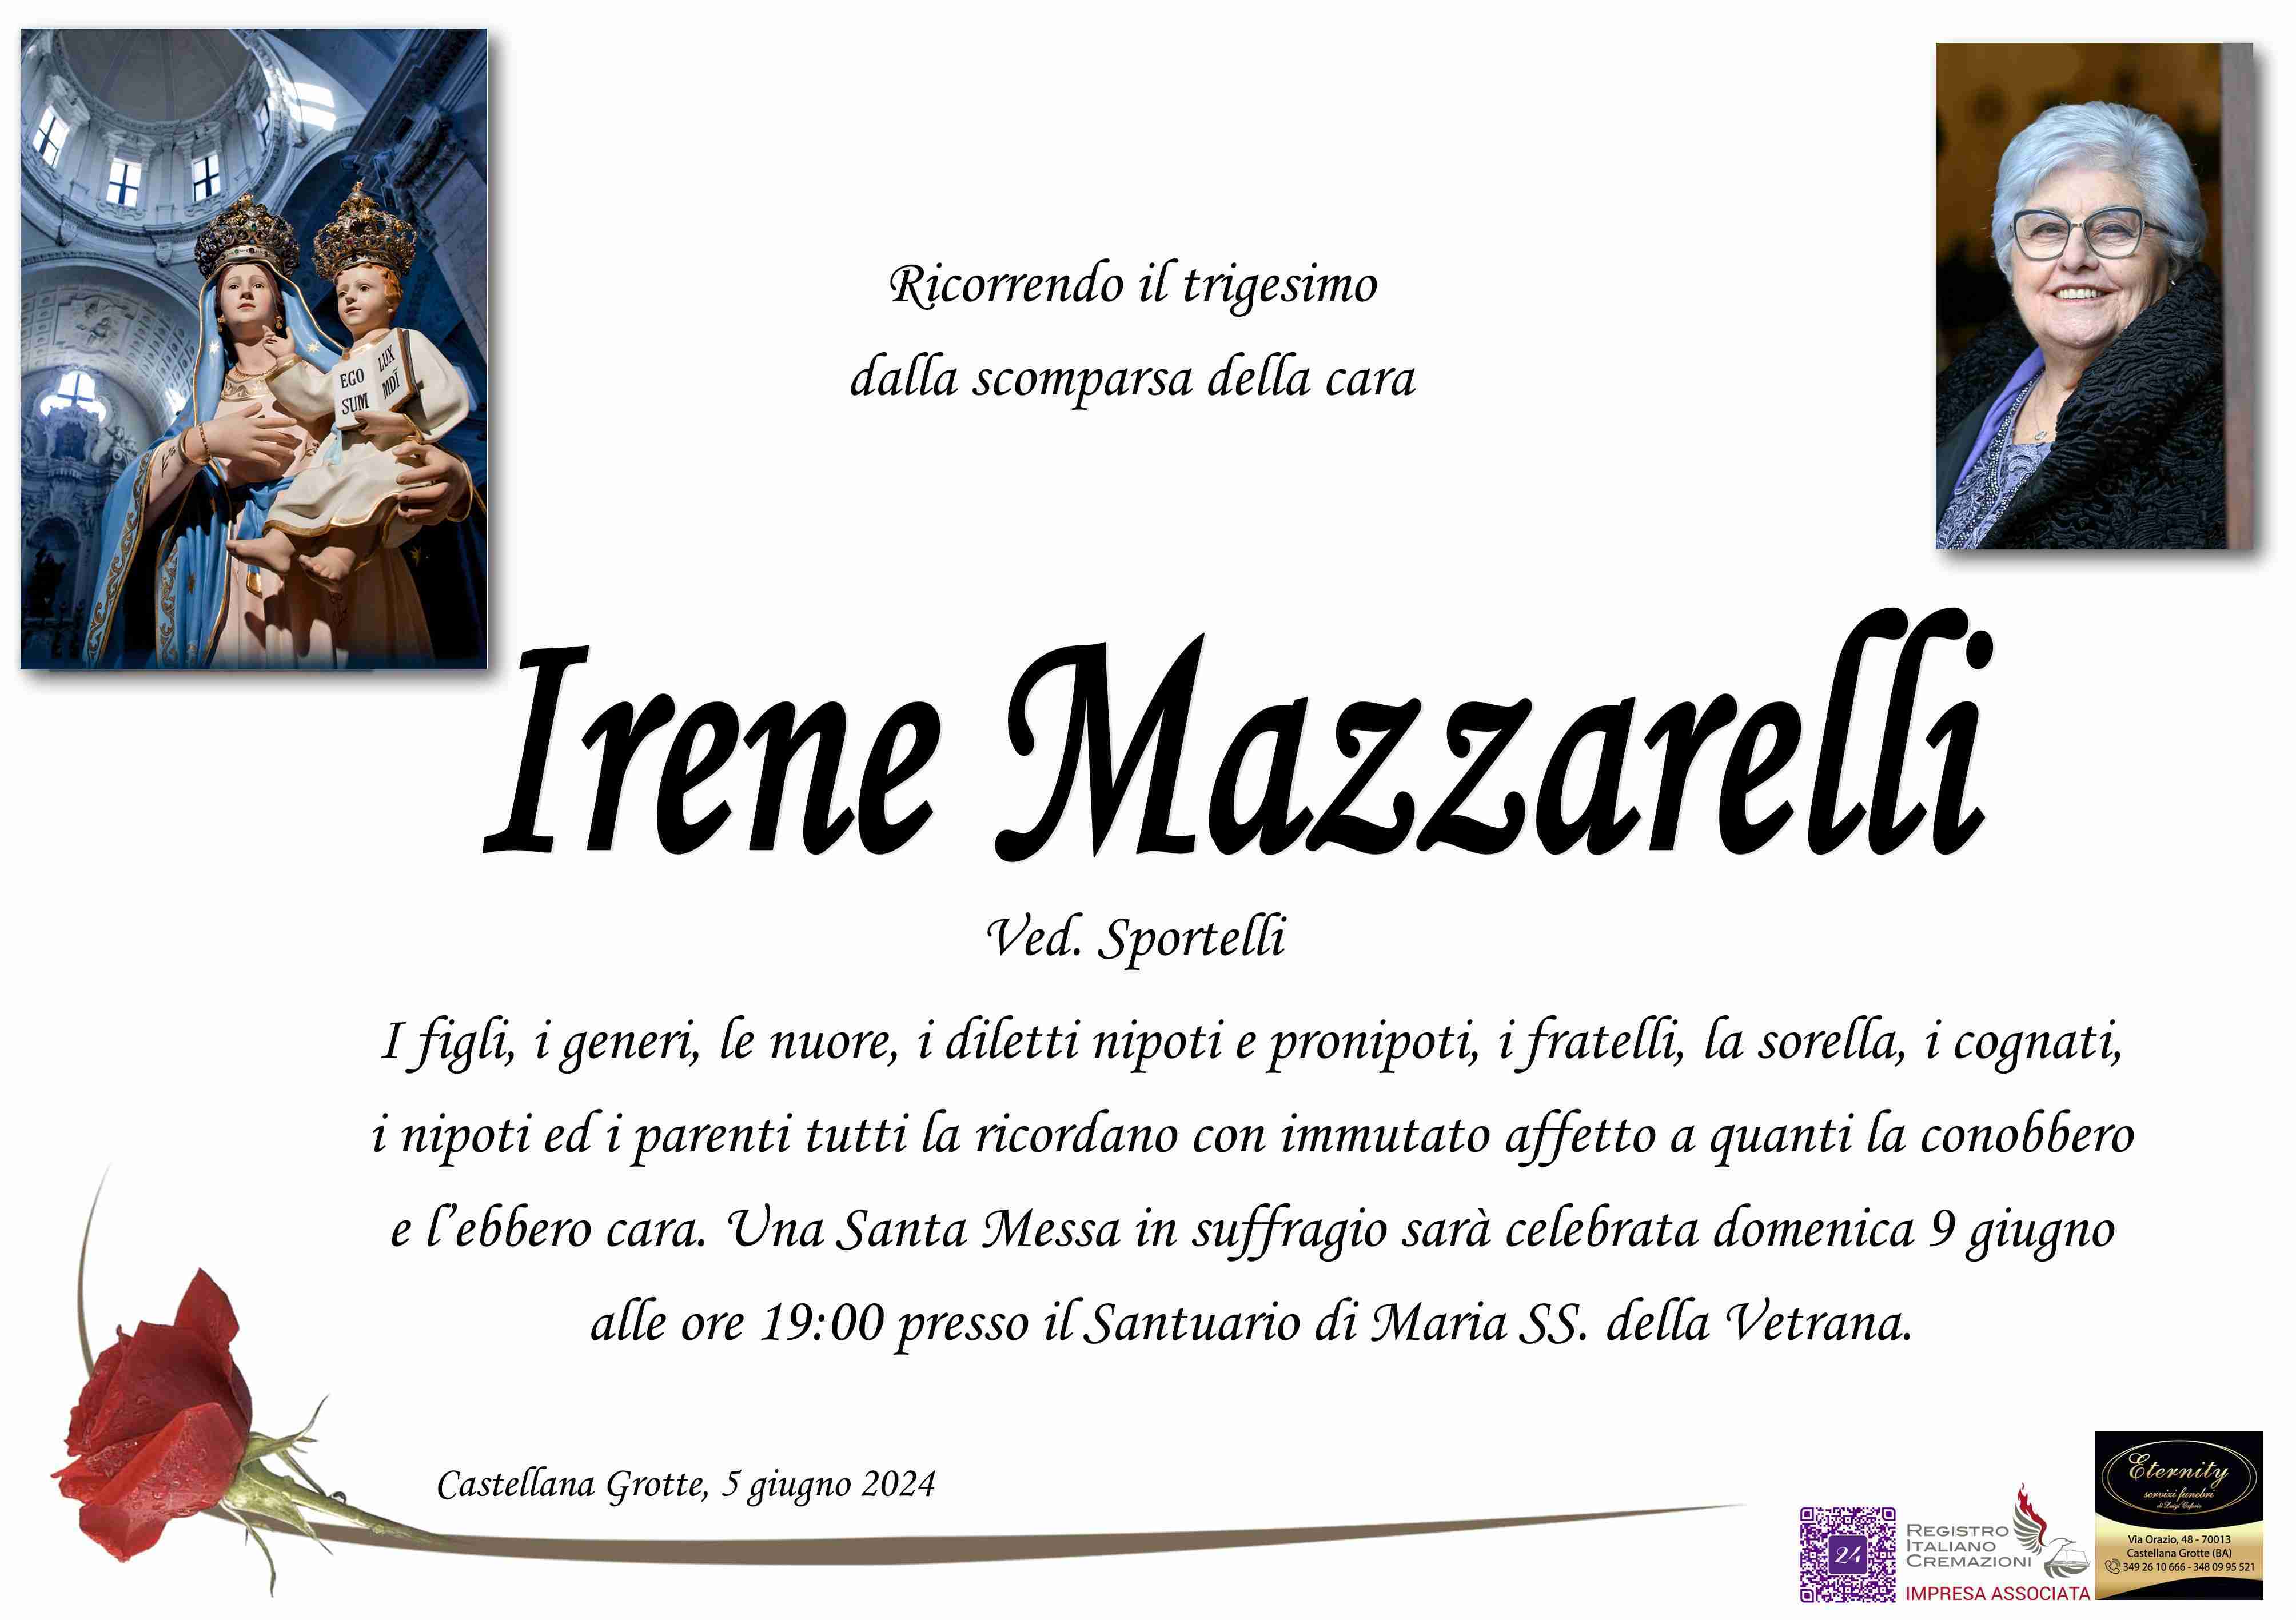 Irene Mazzarelli